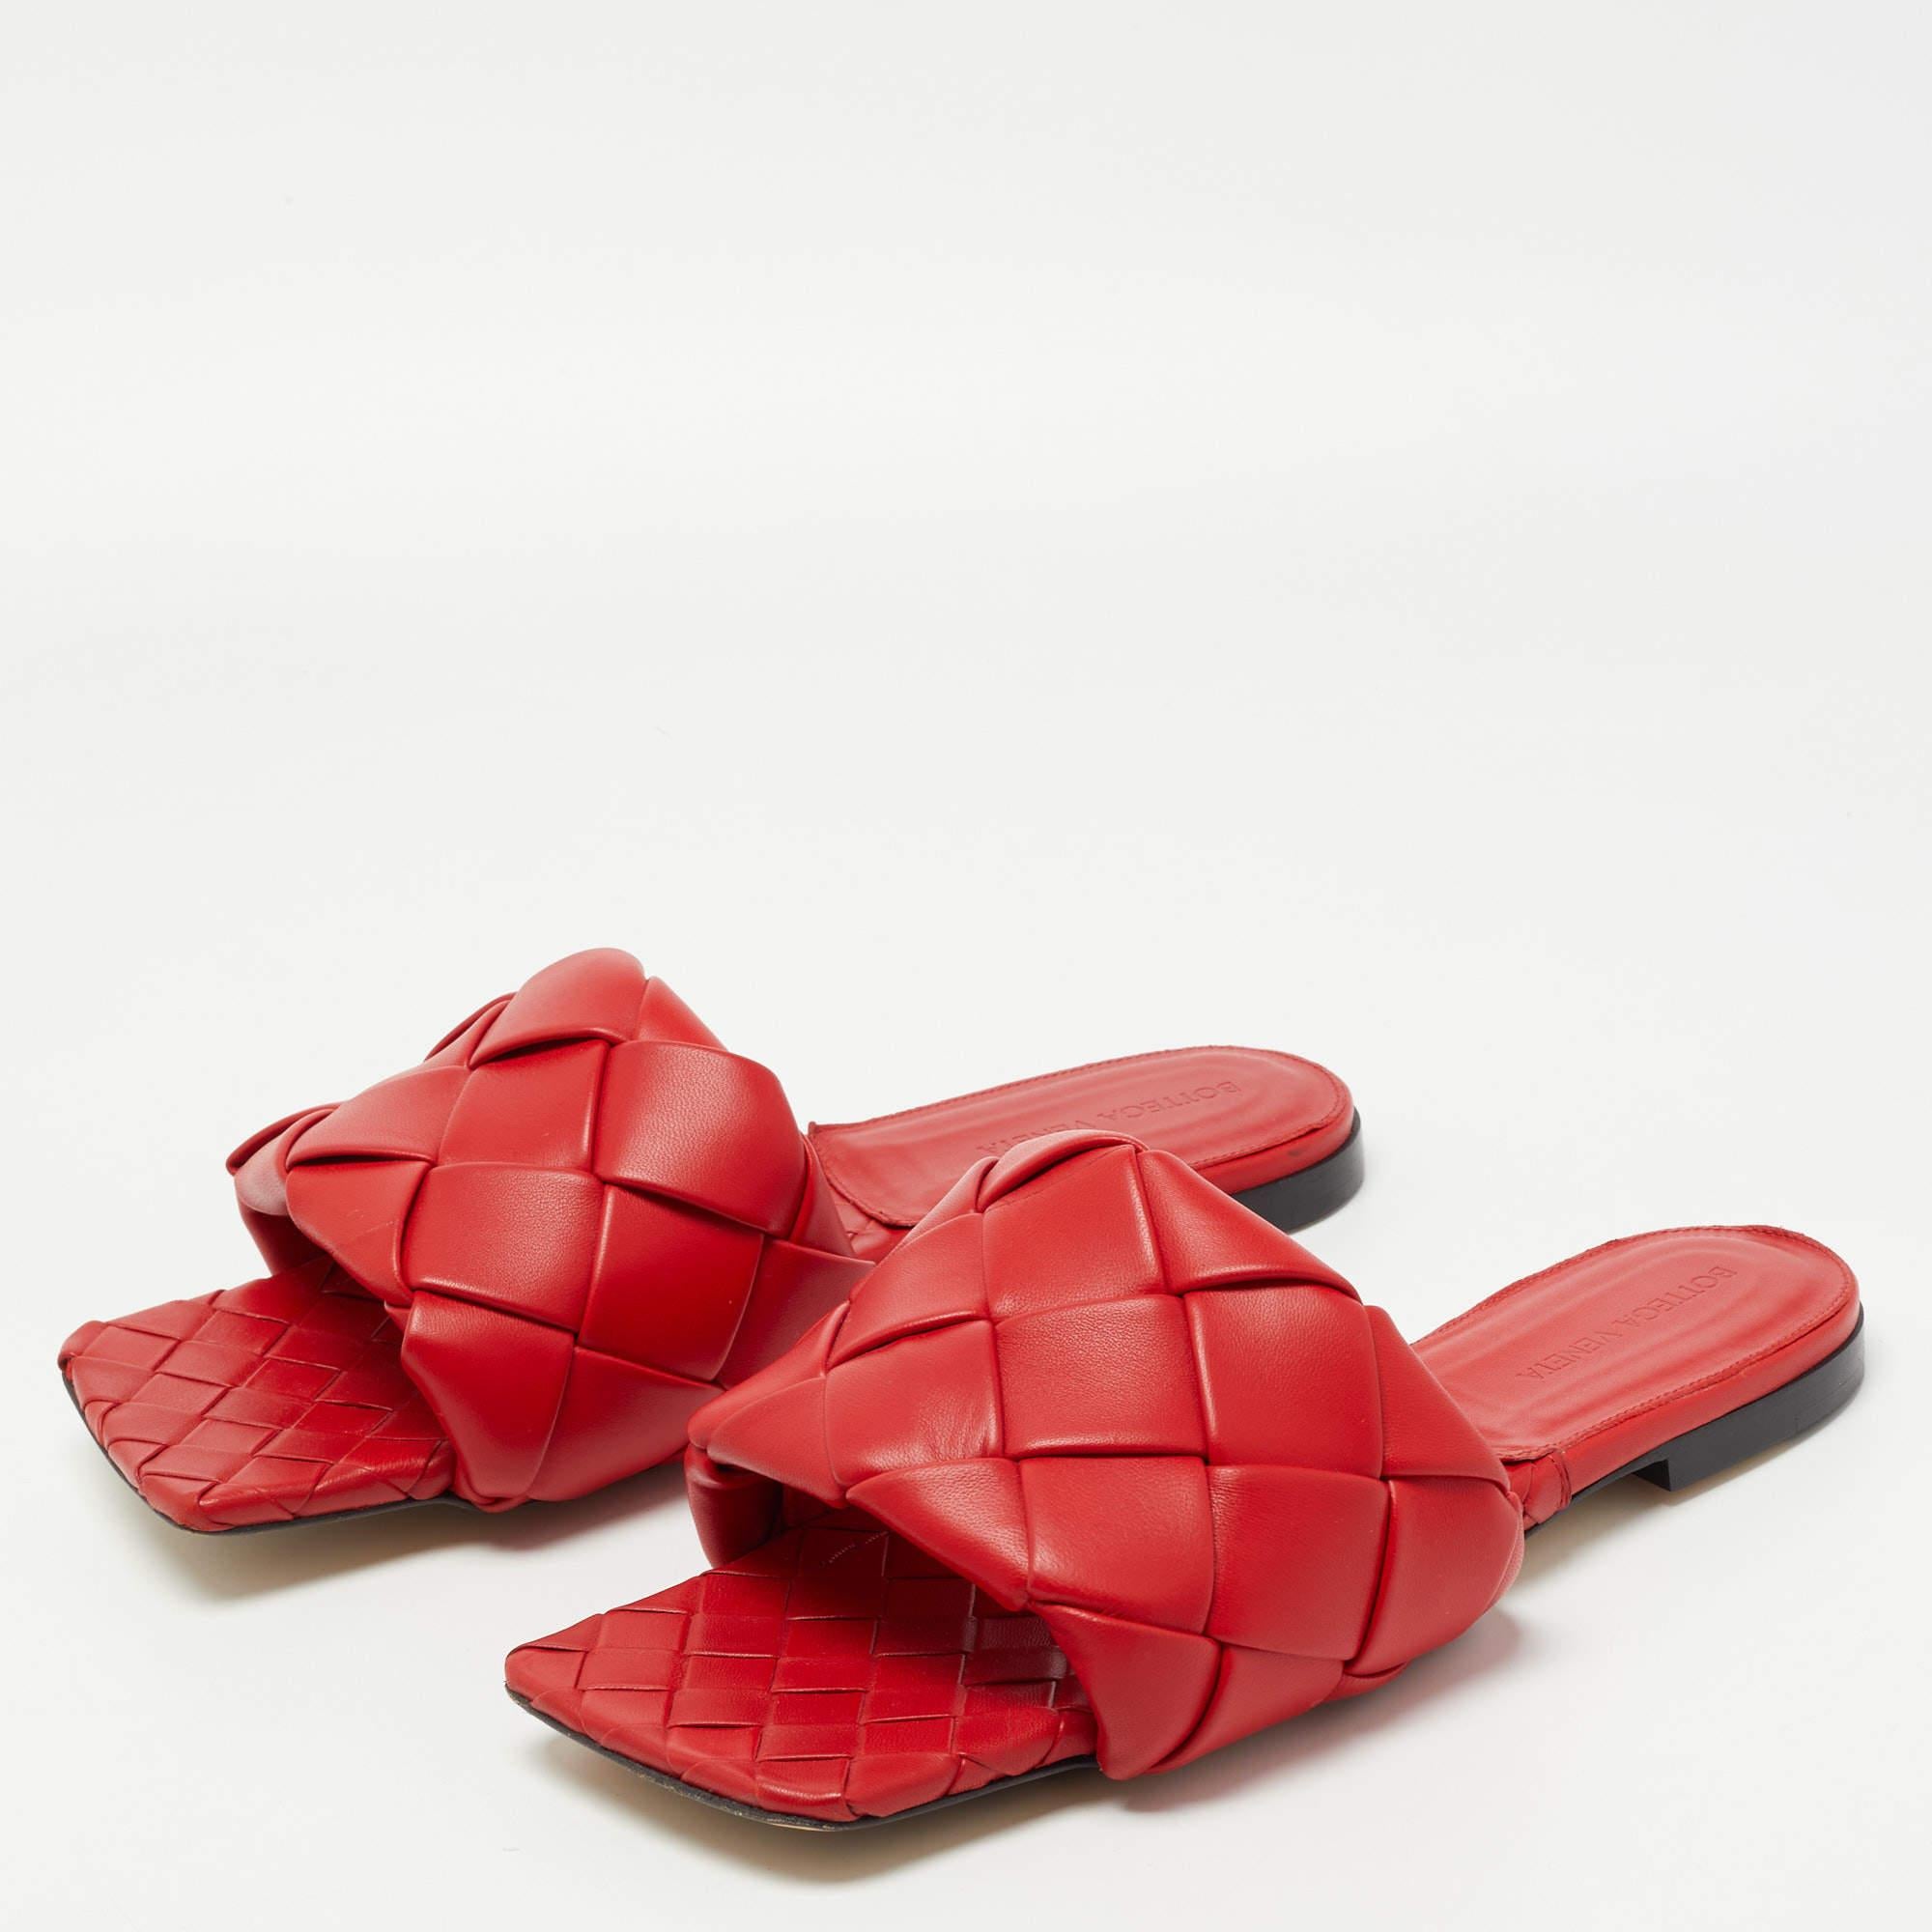 Bottega Veneta Red Intrecciato Leather Lido Slide Flats Size 40 1